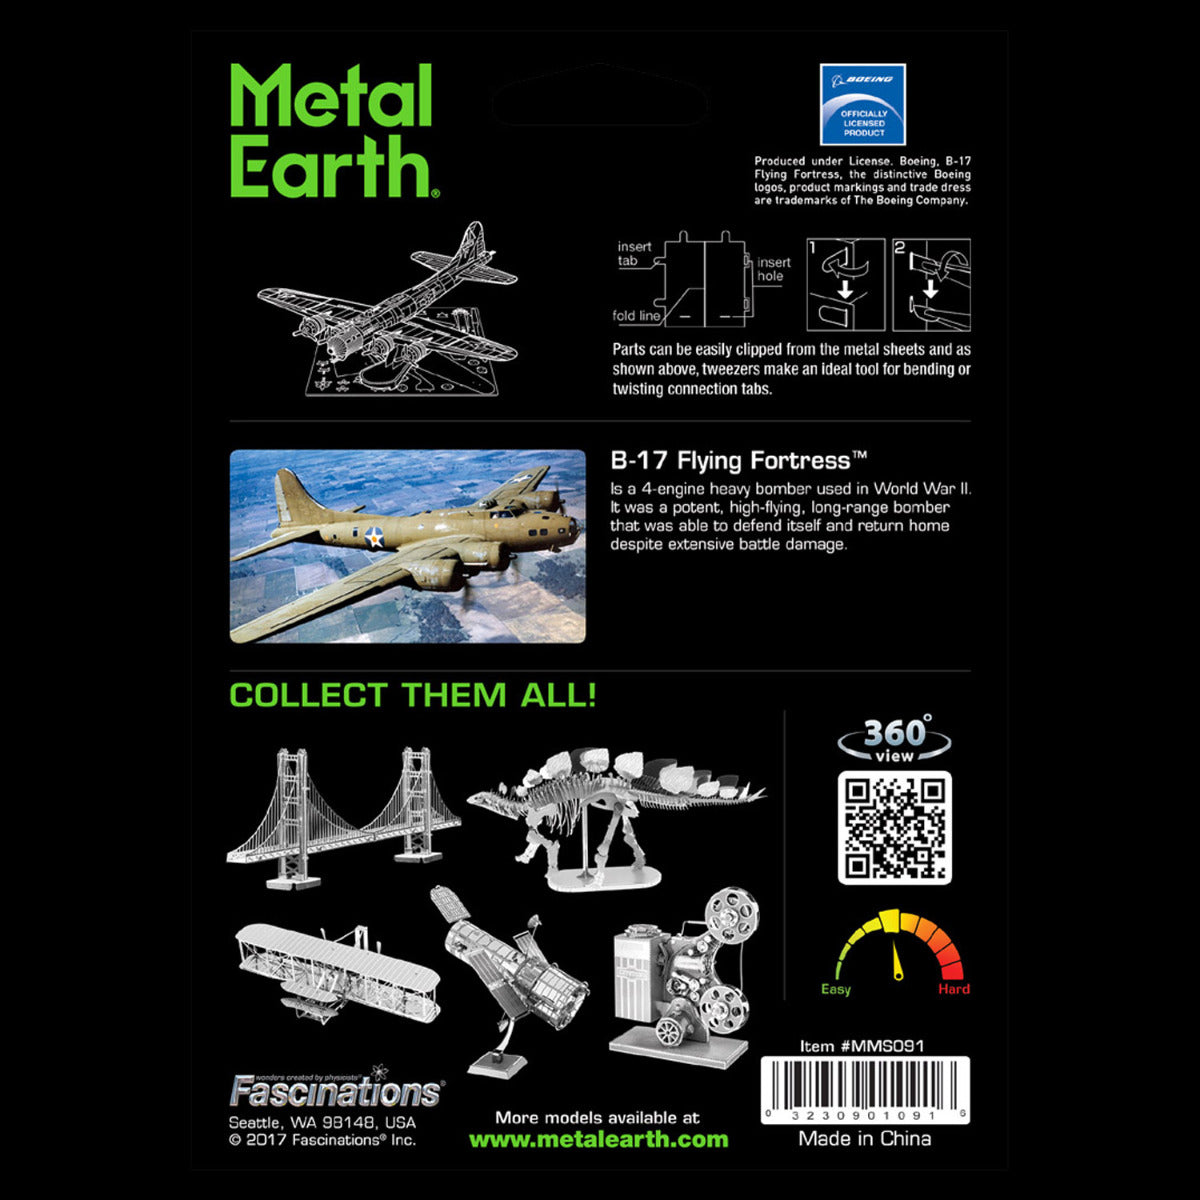 Metal Earth Metallbausätze MMS091 B-17 Flying Fortress Metall Modell